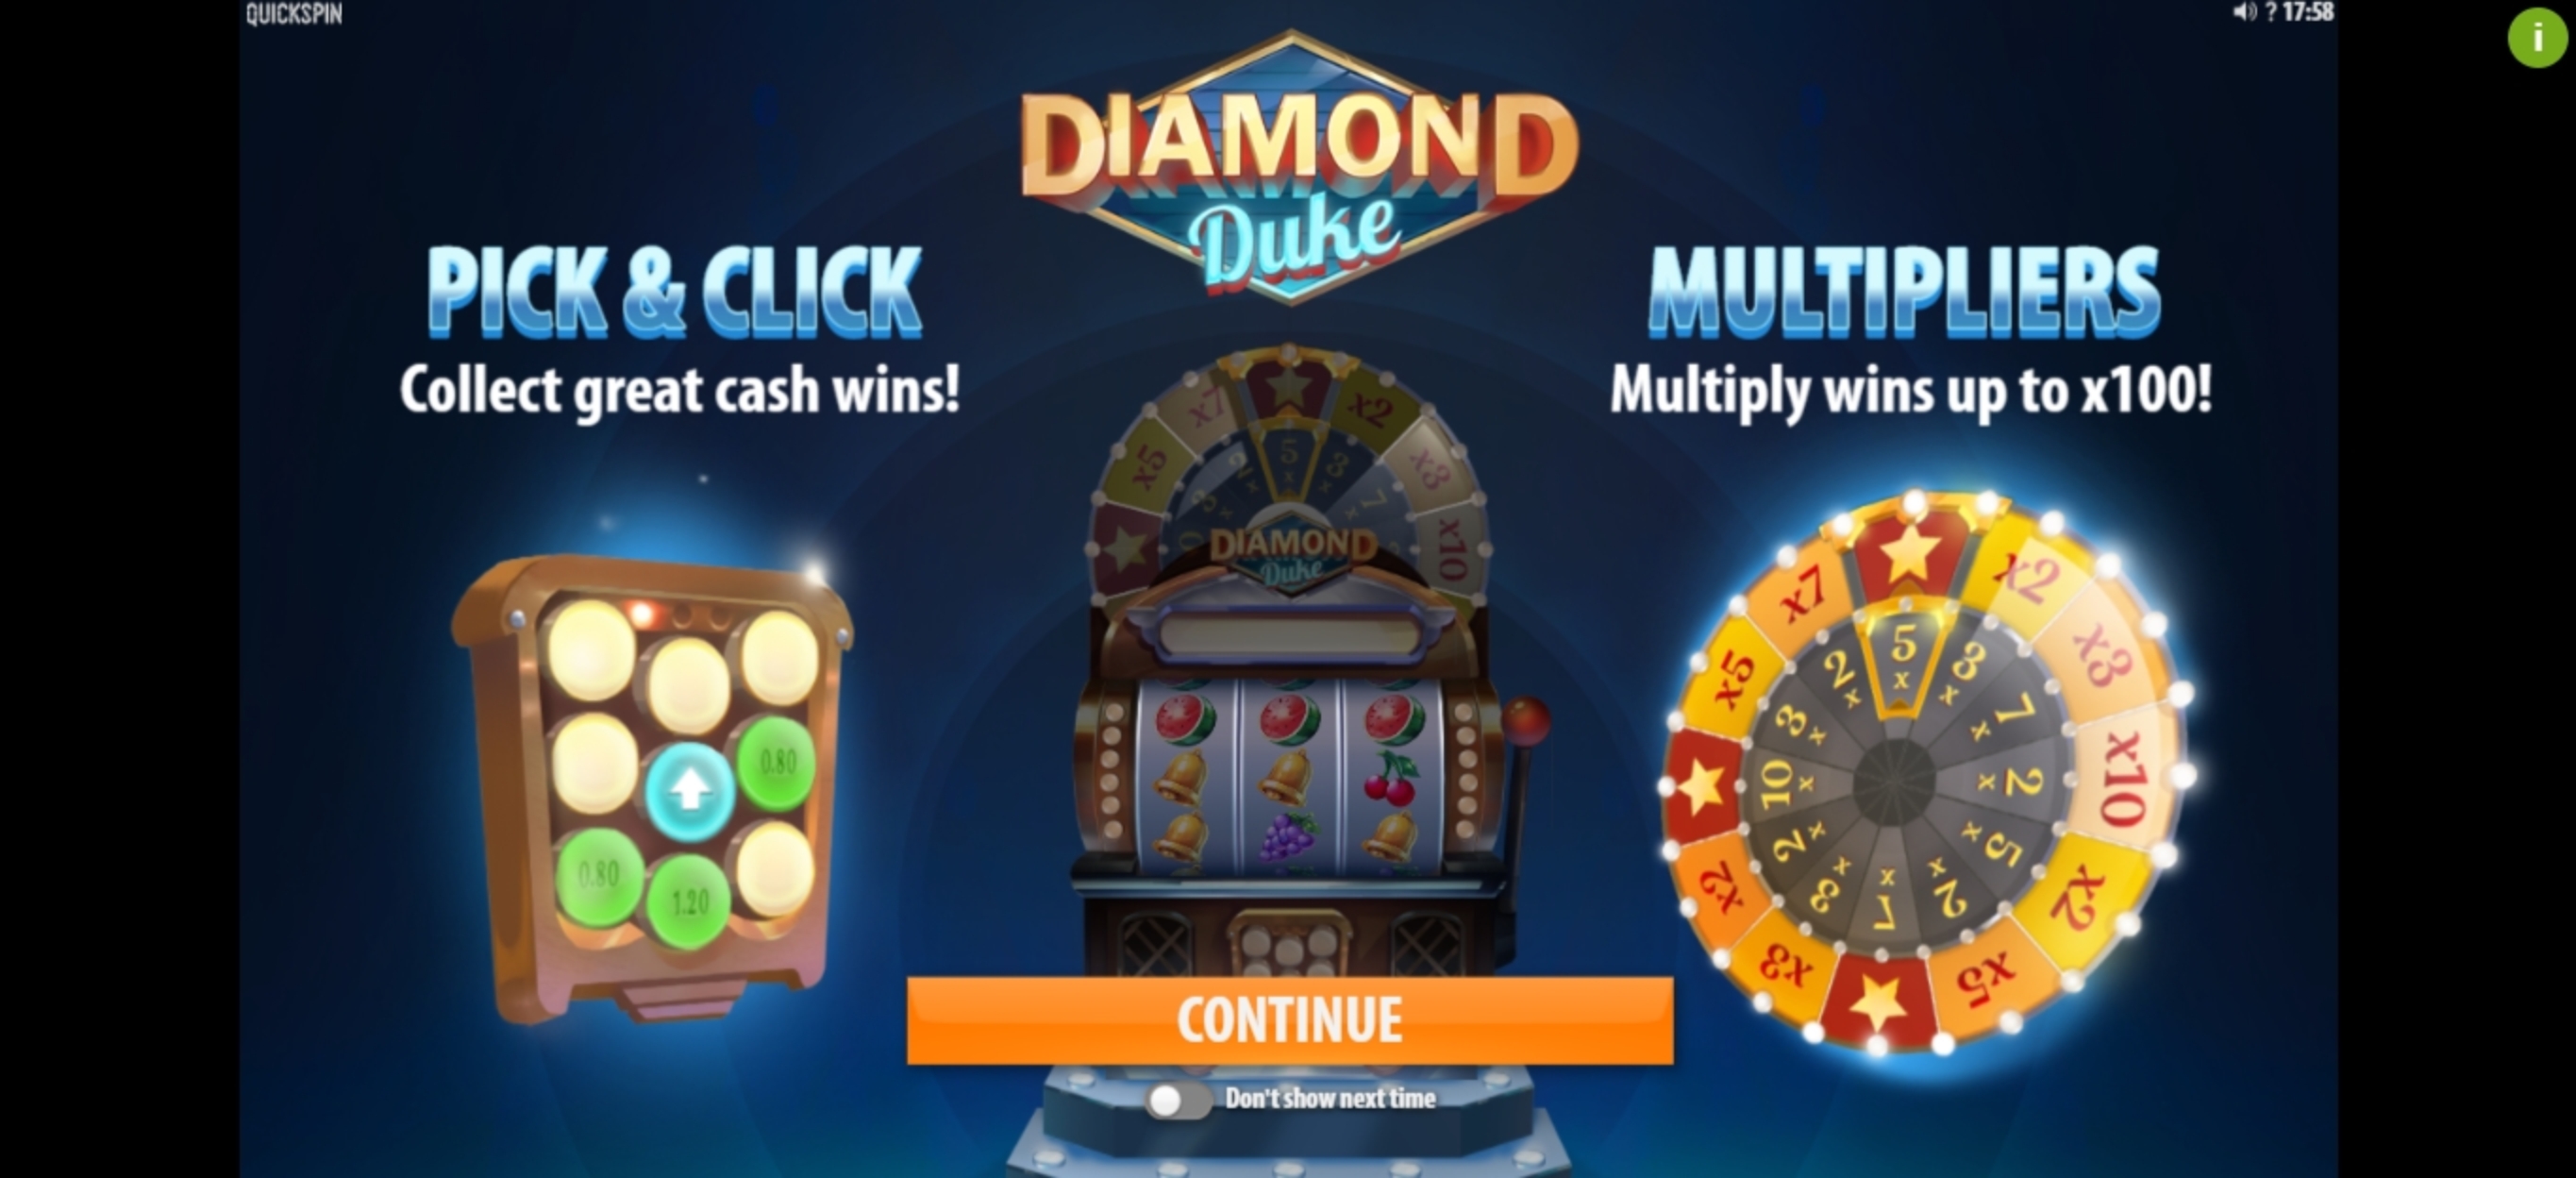 Play Diamond Duke Free Casino Slot Game by Quickspin